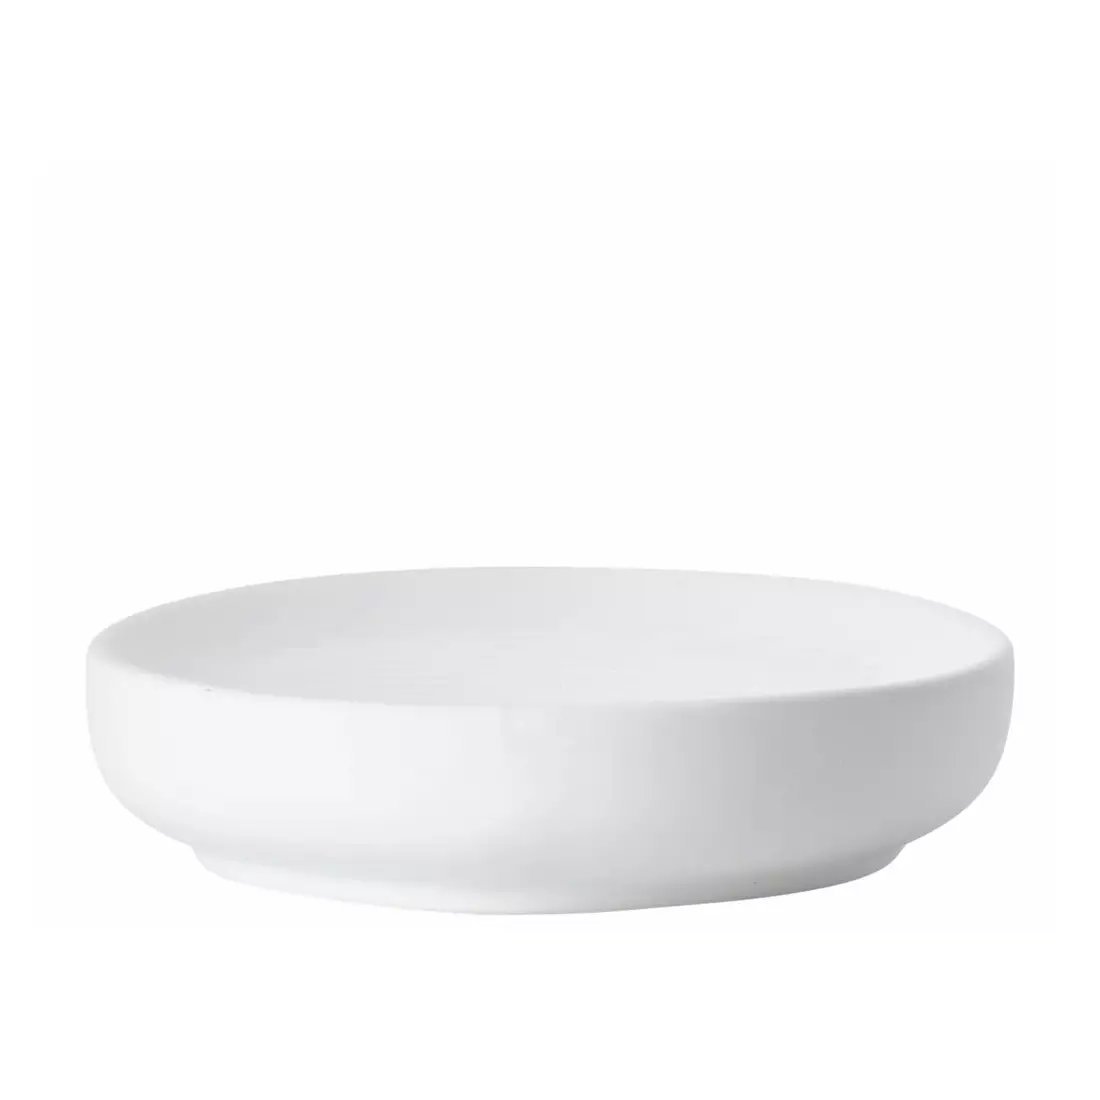 ZONE DENMARK UME white soap dish